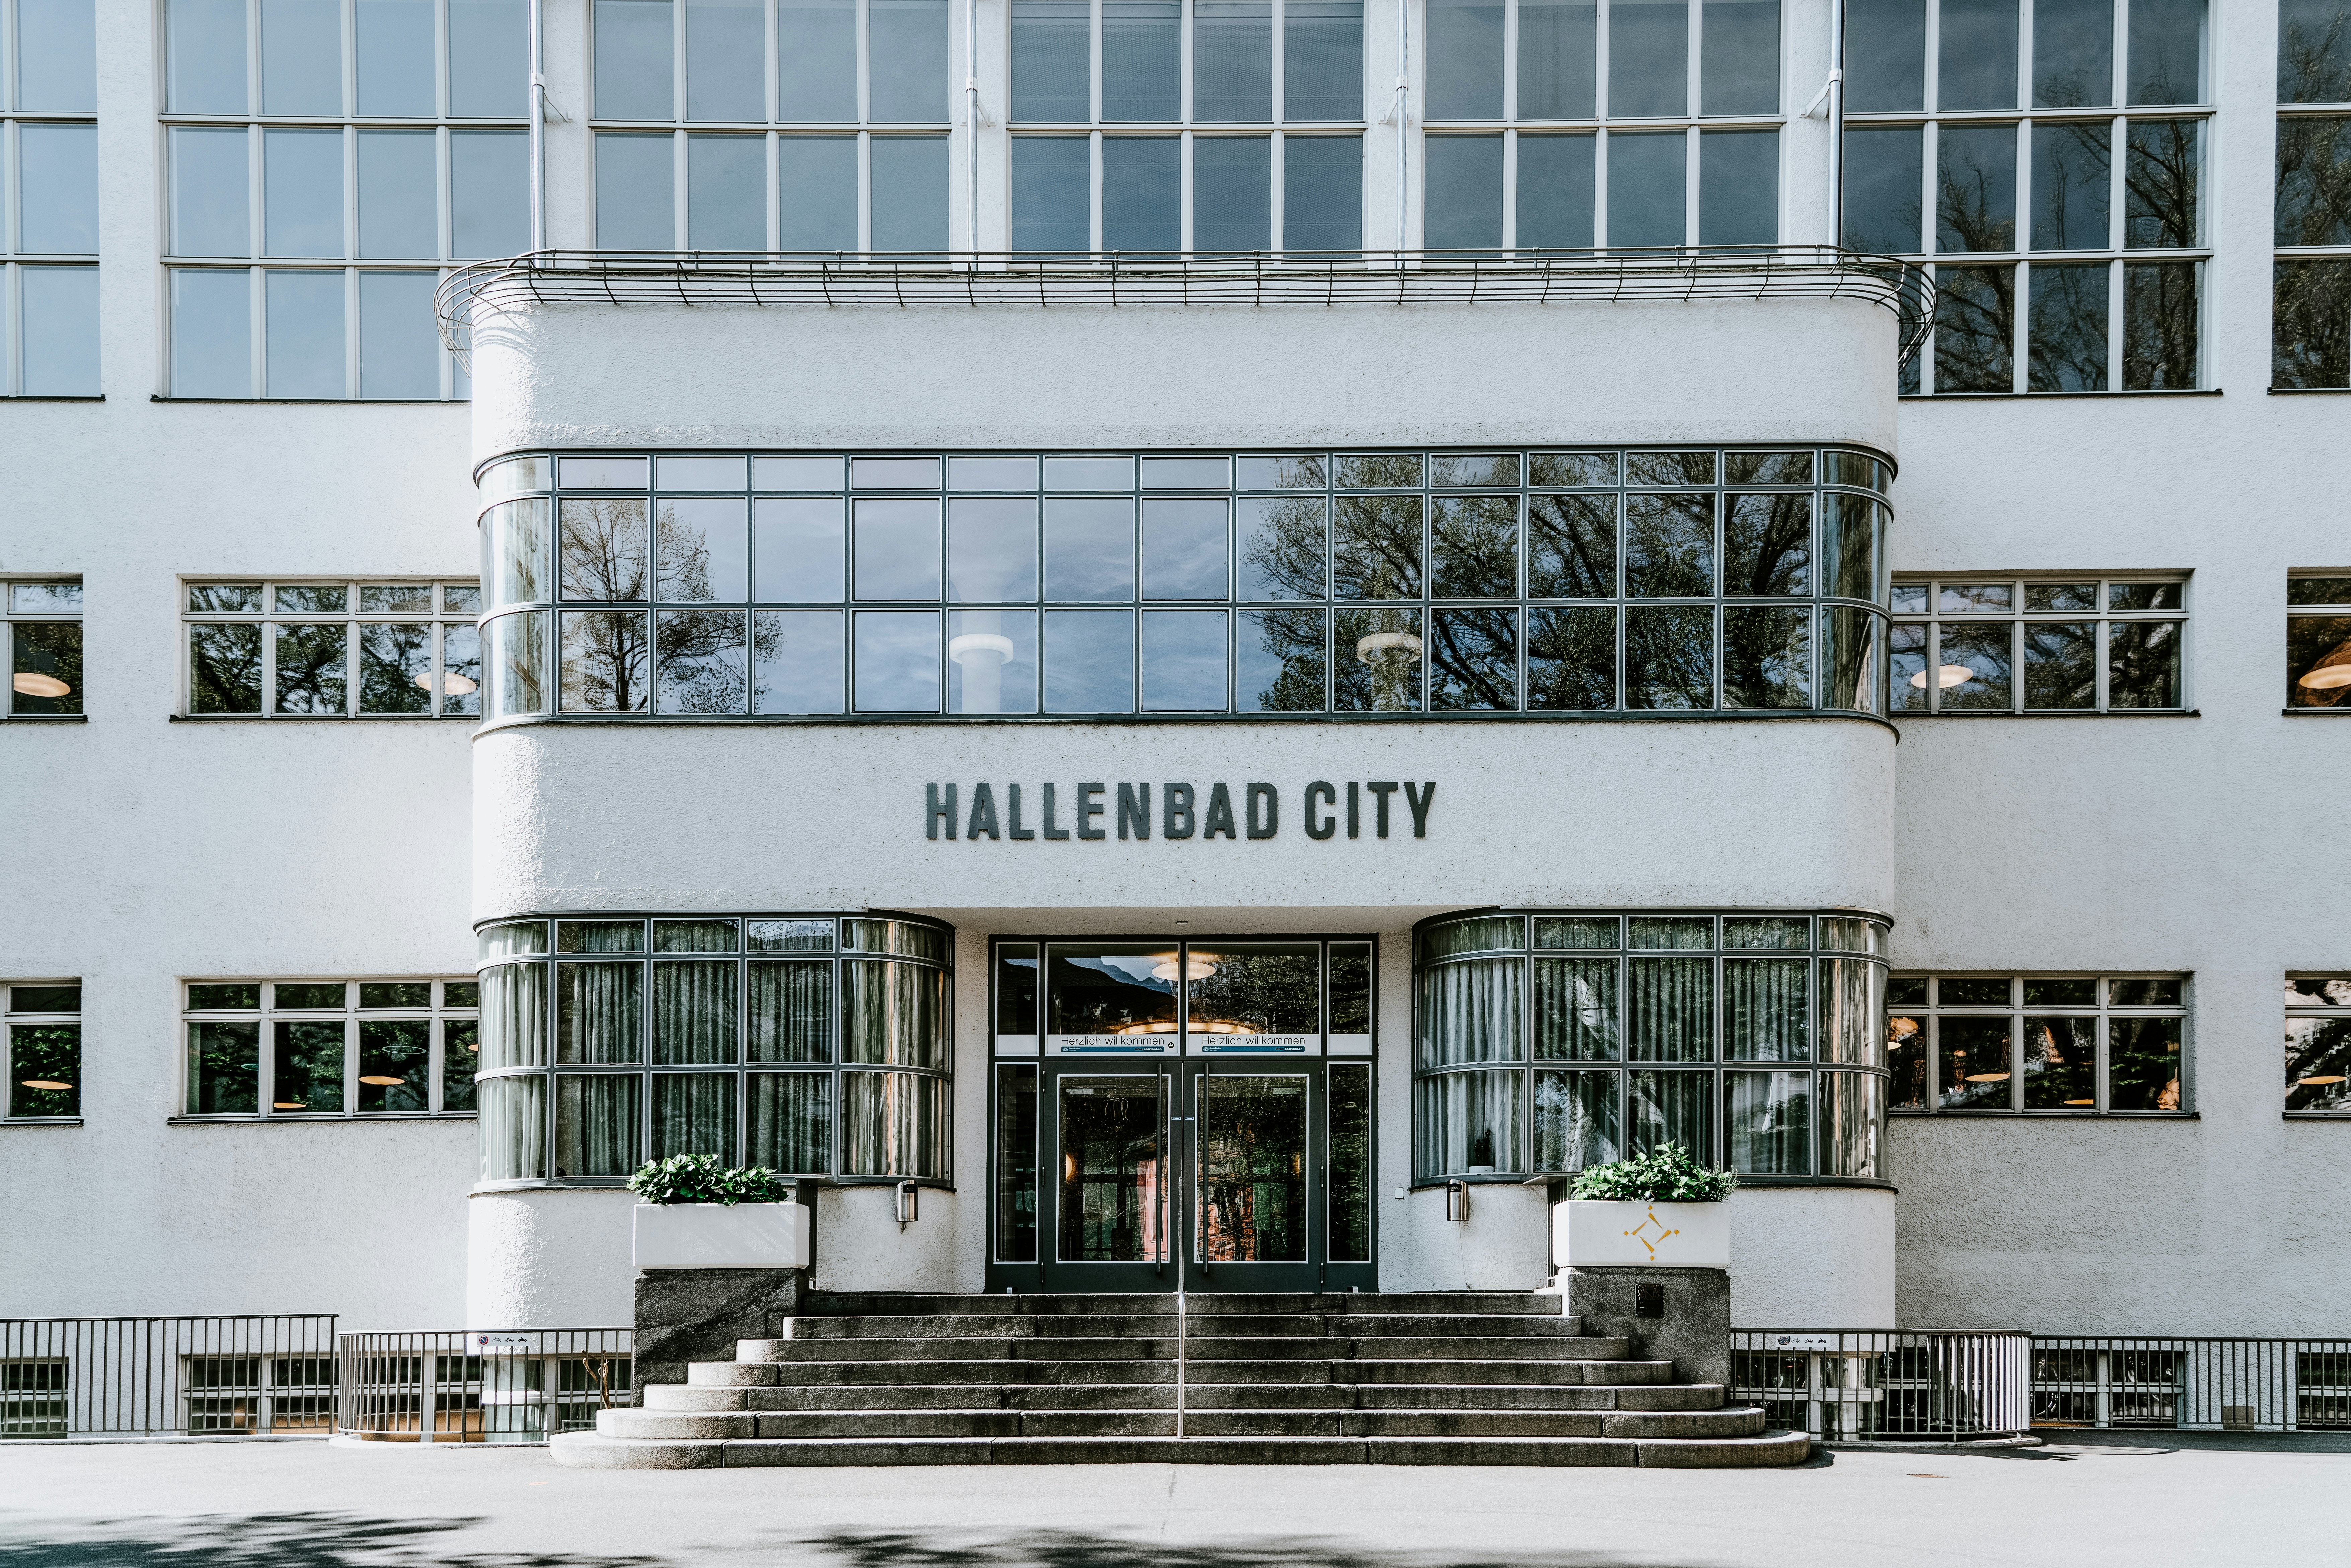 Hallenbad City building